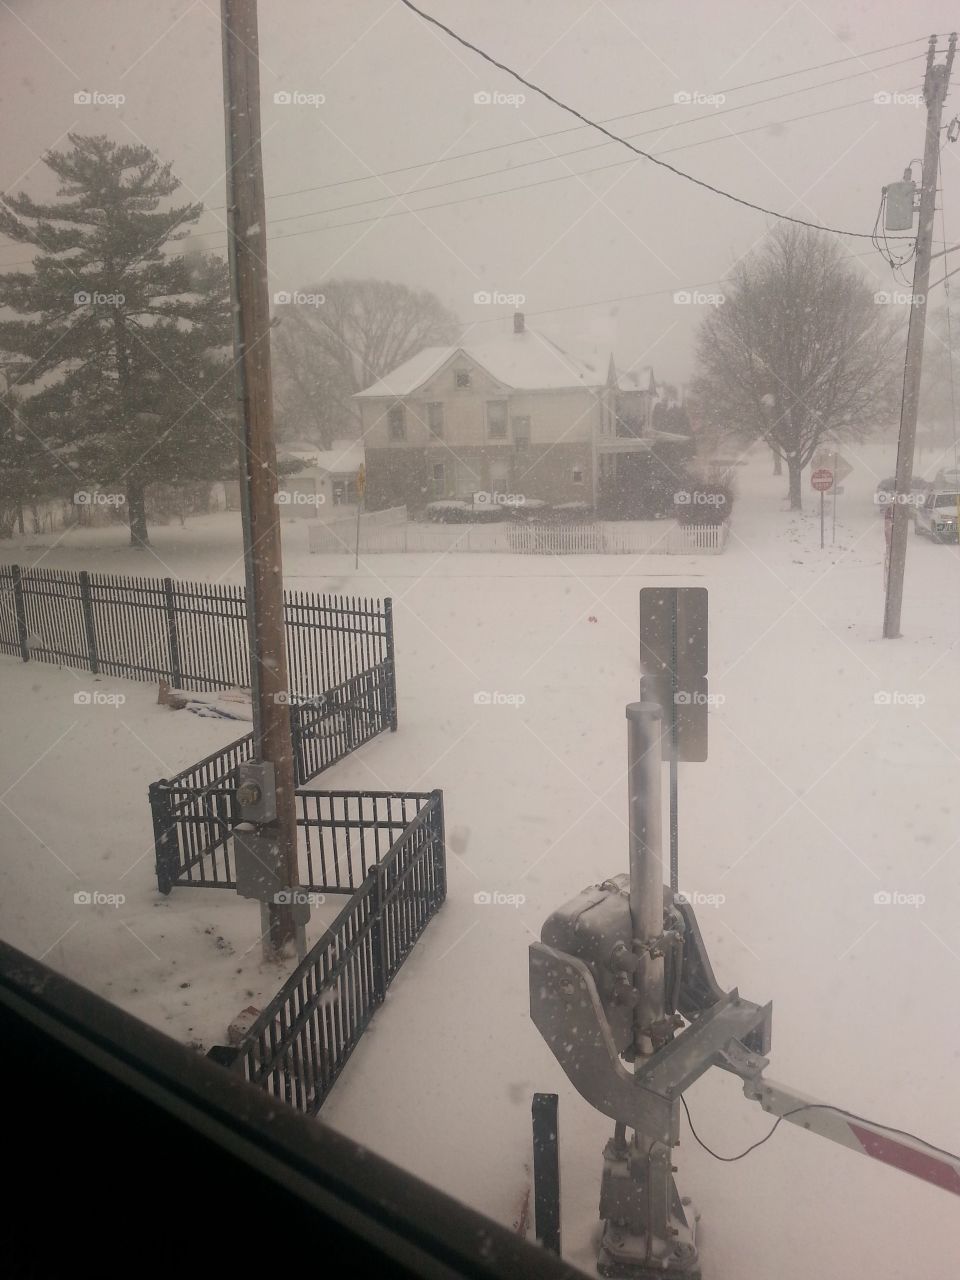 Snowy Stopover on Amtrak